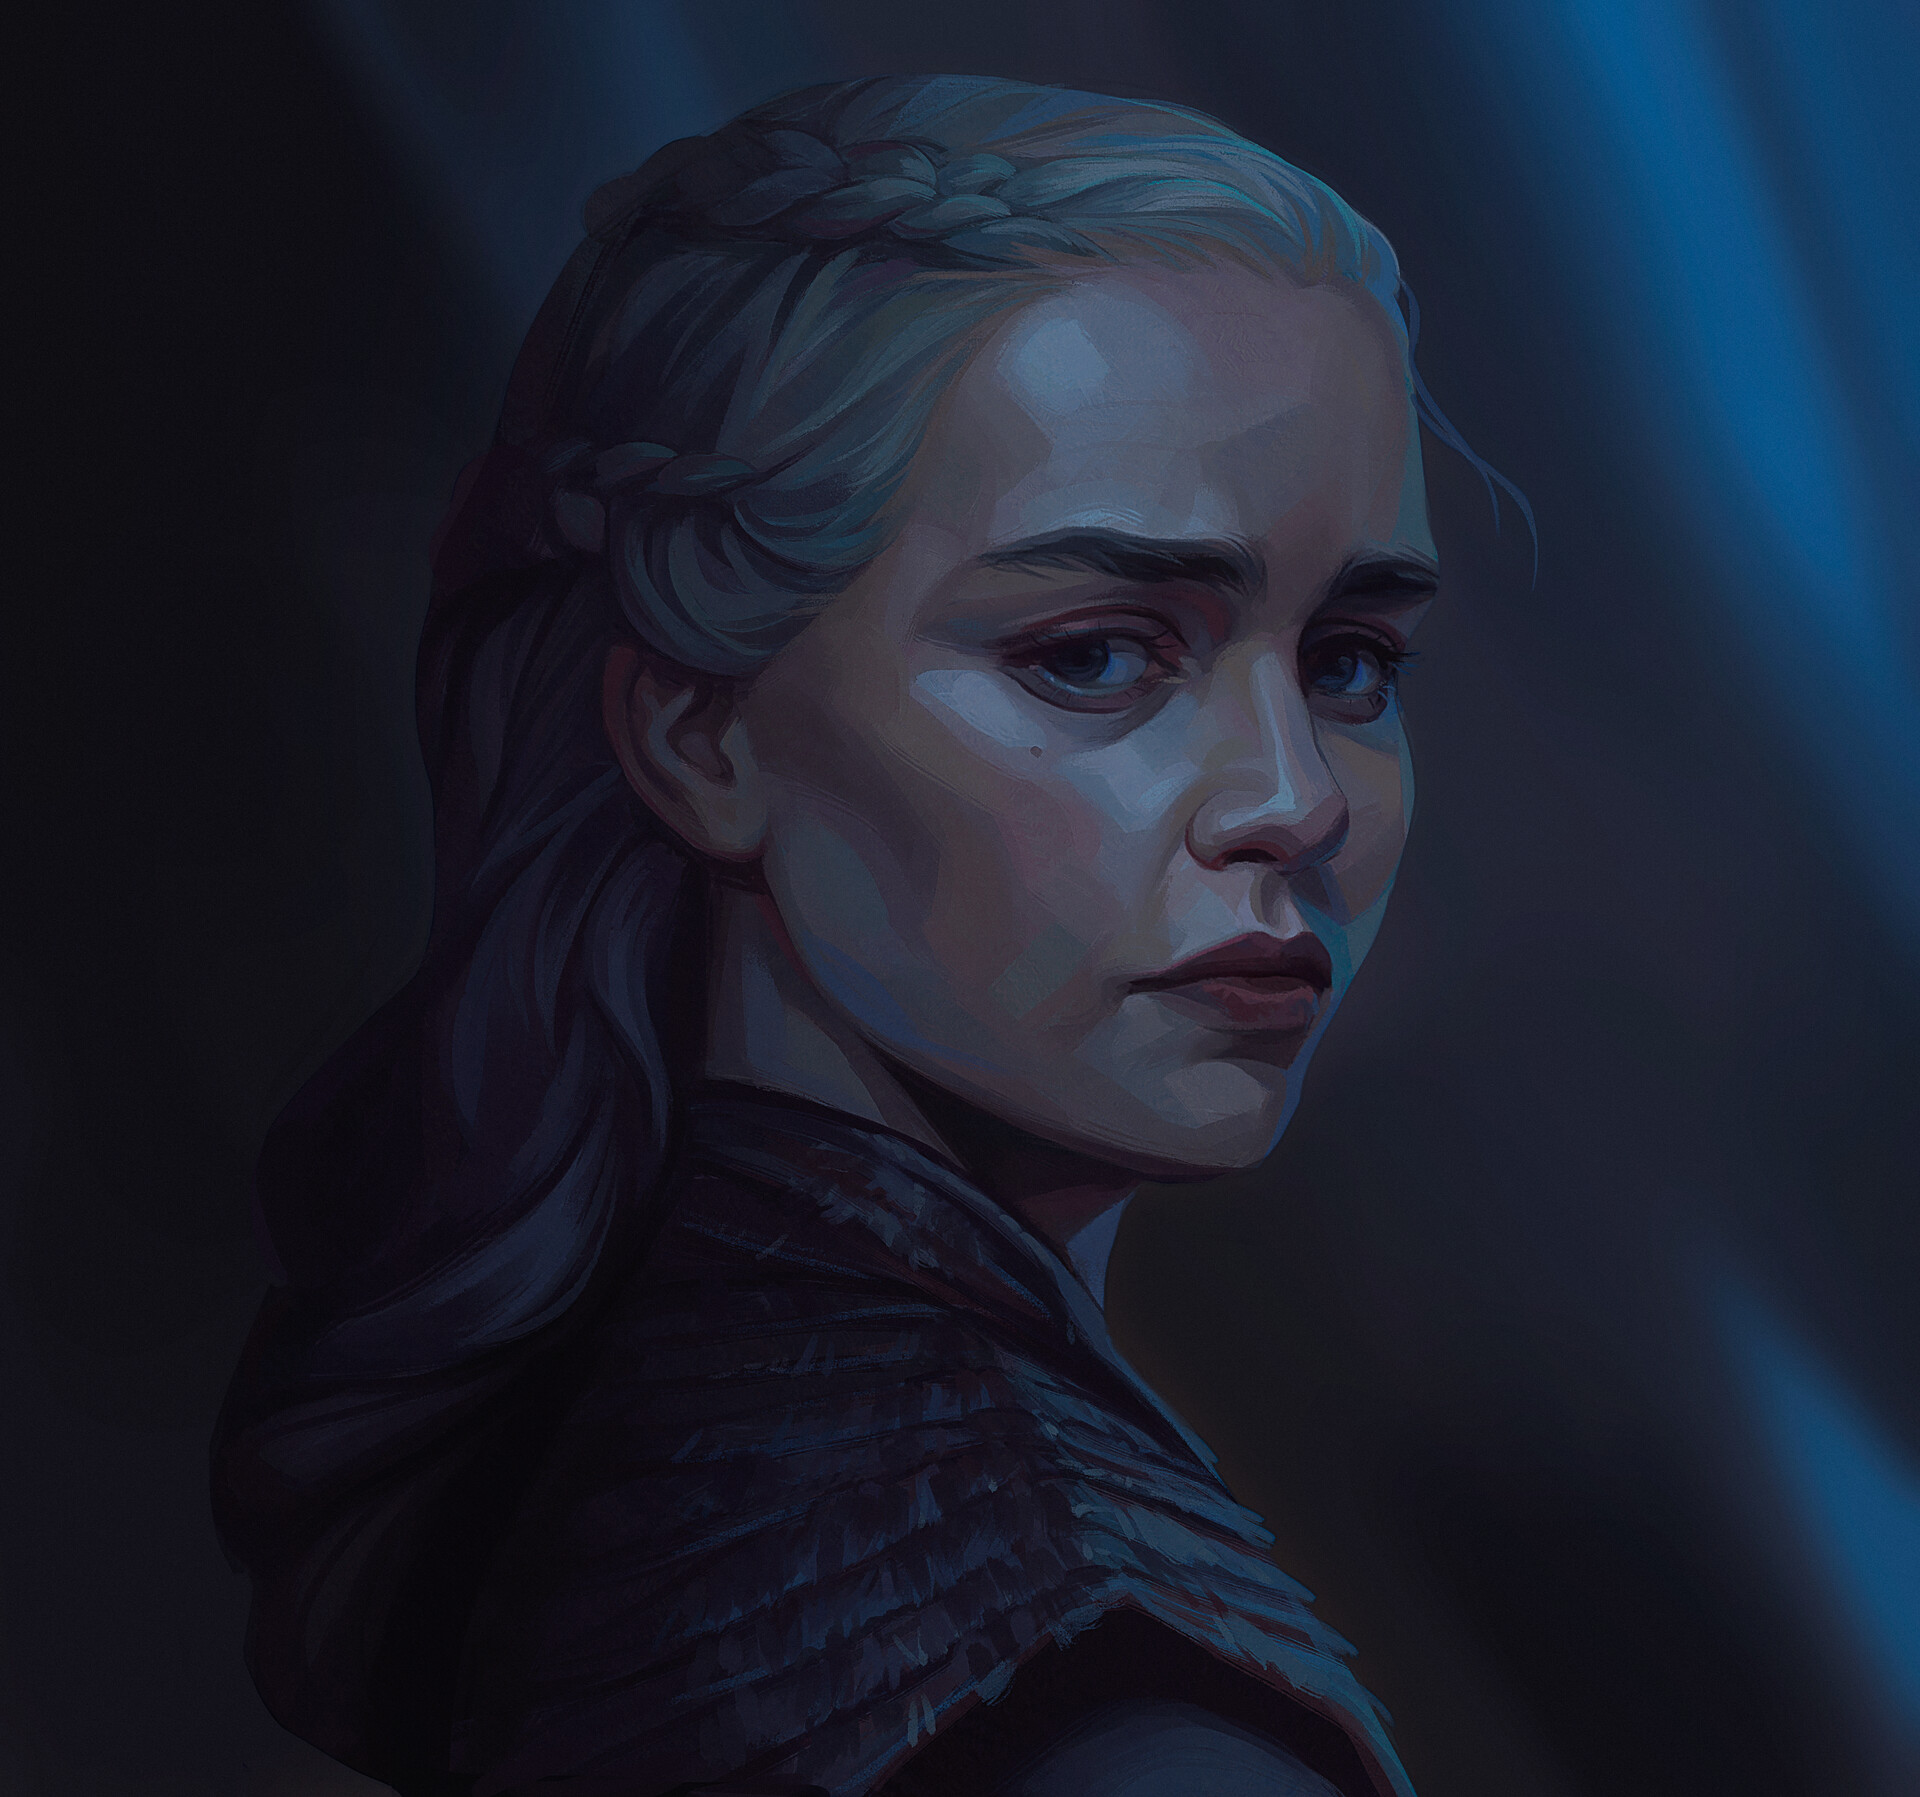 General 1920x1797 TV series Game of Thrones Daenerys Targaryen portrait face women fantasy art fantasy girl